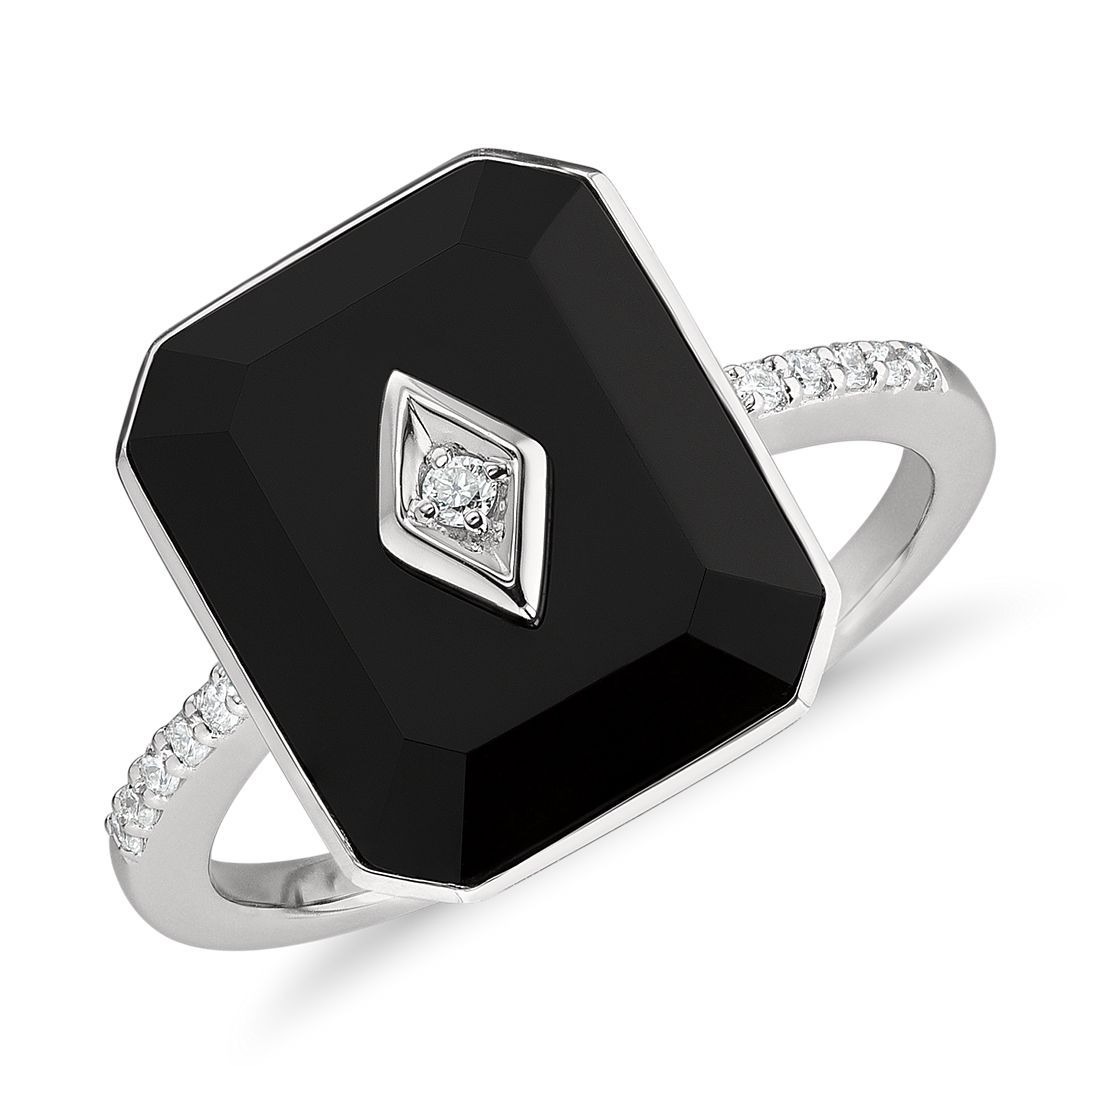 Blue Nile Studio Black Onyx and Diamond Ring in 18k White Gold | Blue Nile | Blue Nile Asia